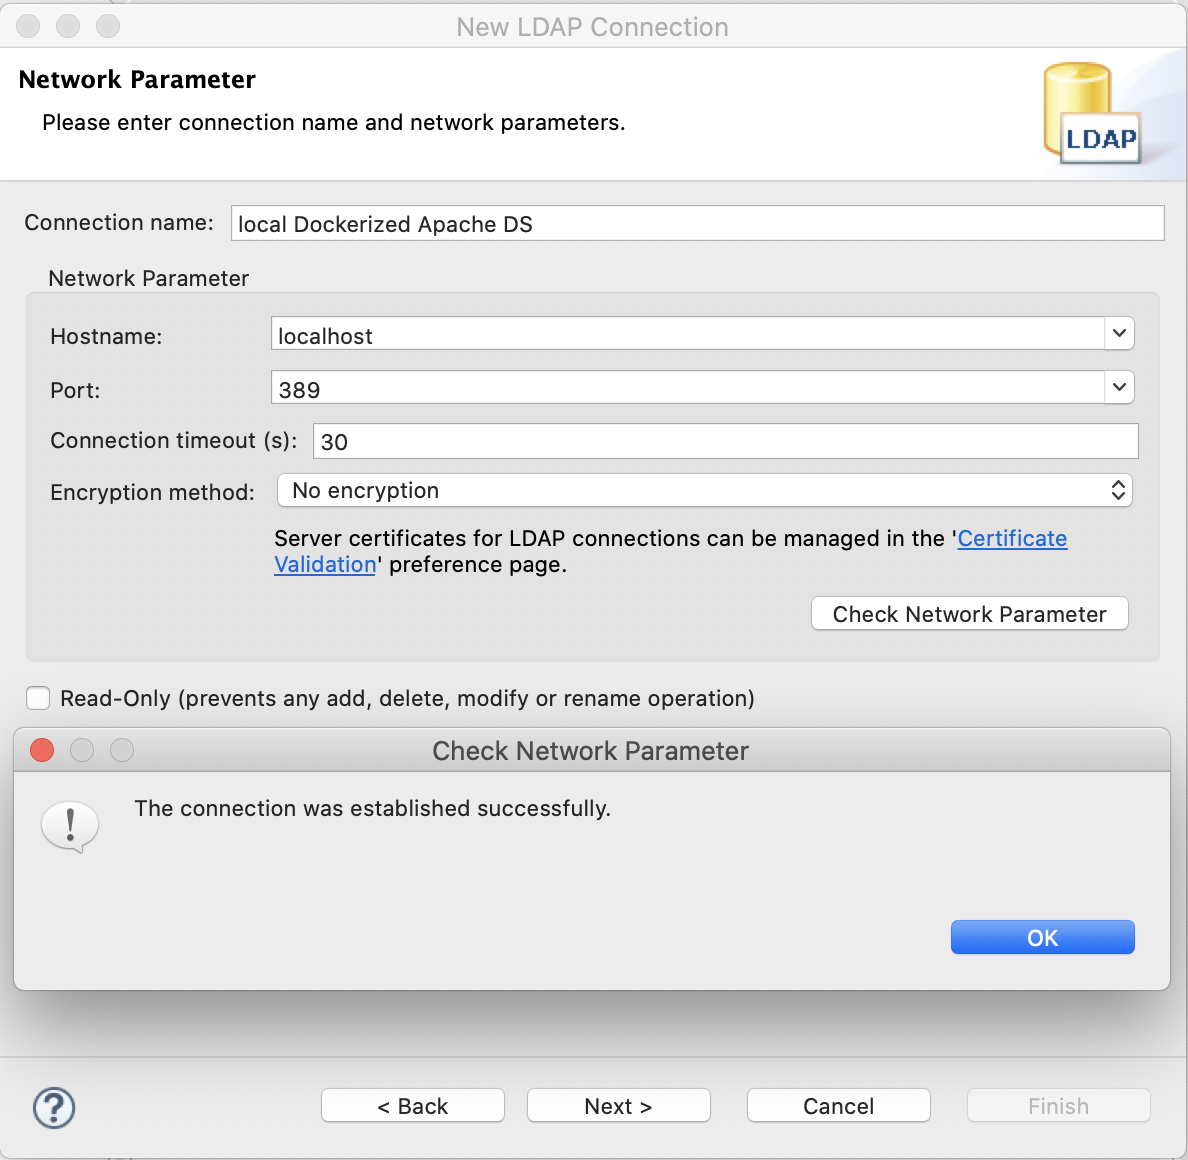 New LDAP Connection - Network Parameter